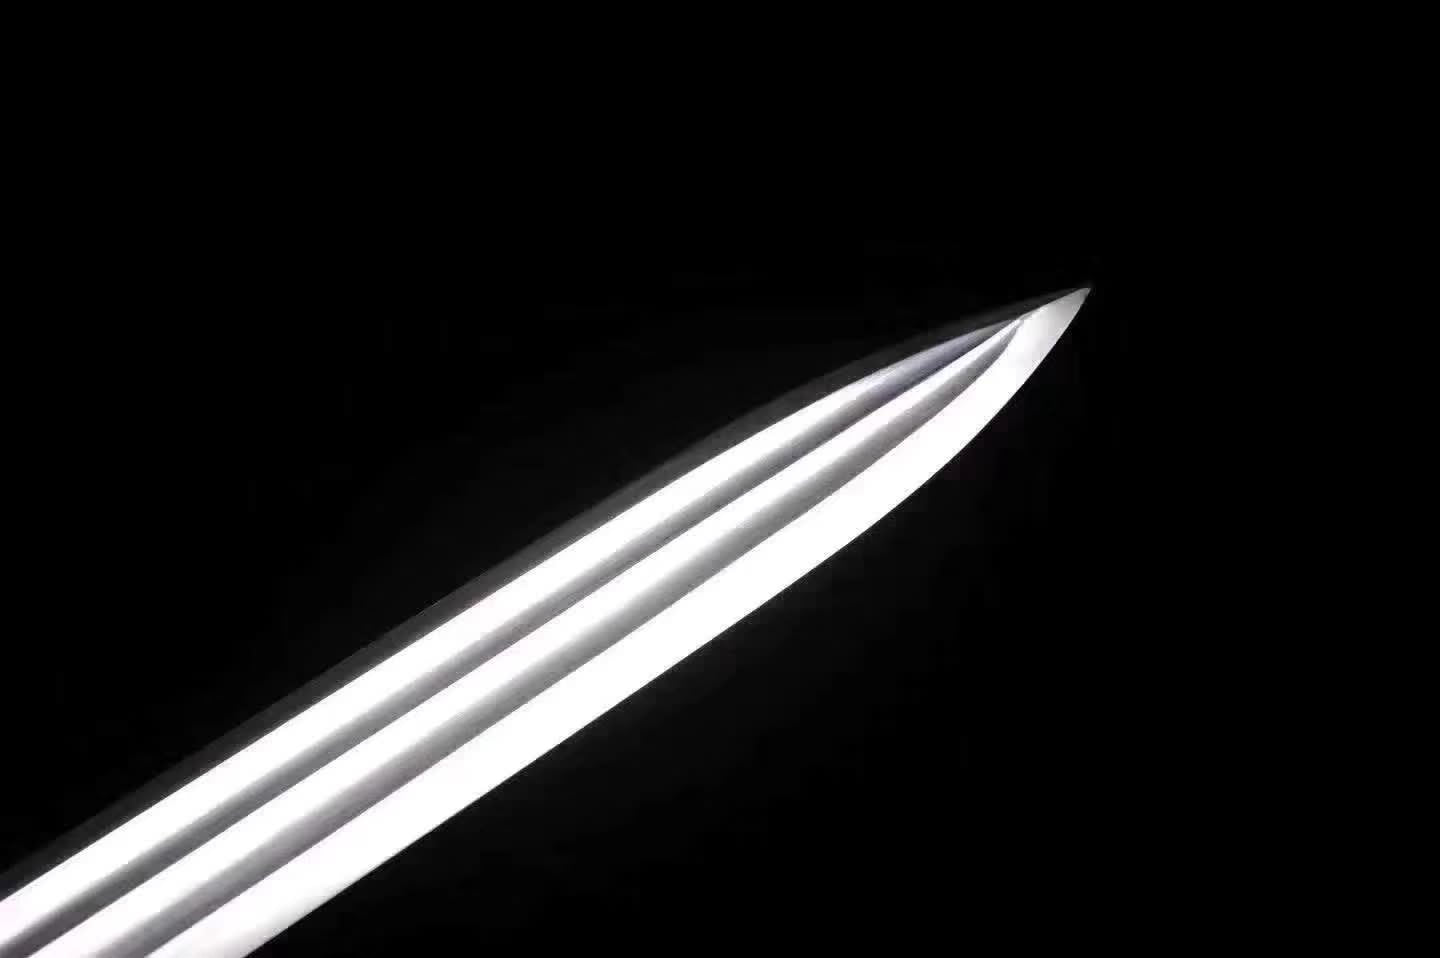 Yongle jian sword,Handmade High carbon steel blade,Redwood scabbard - Chinese sword shop